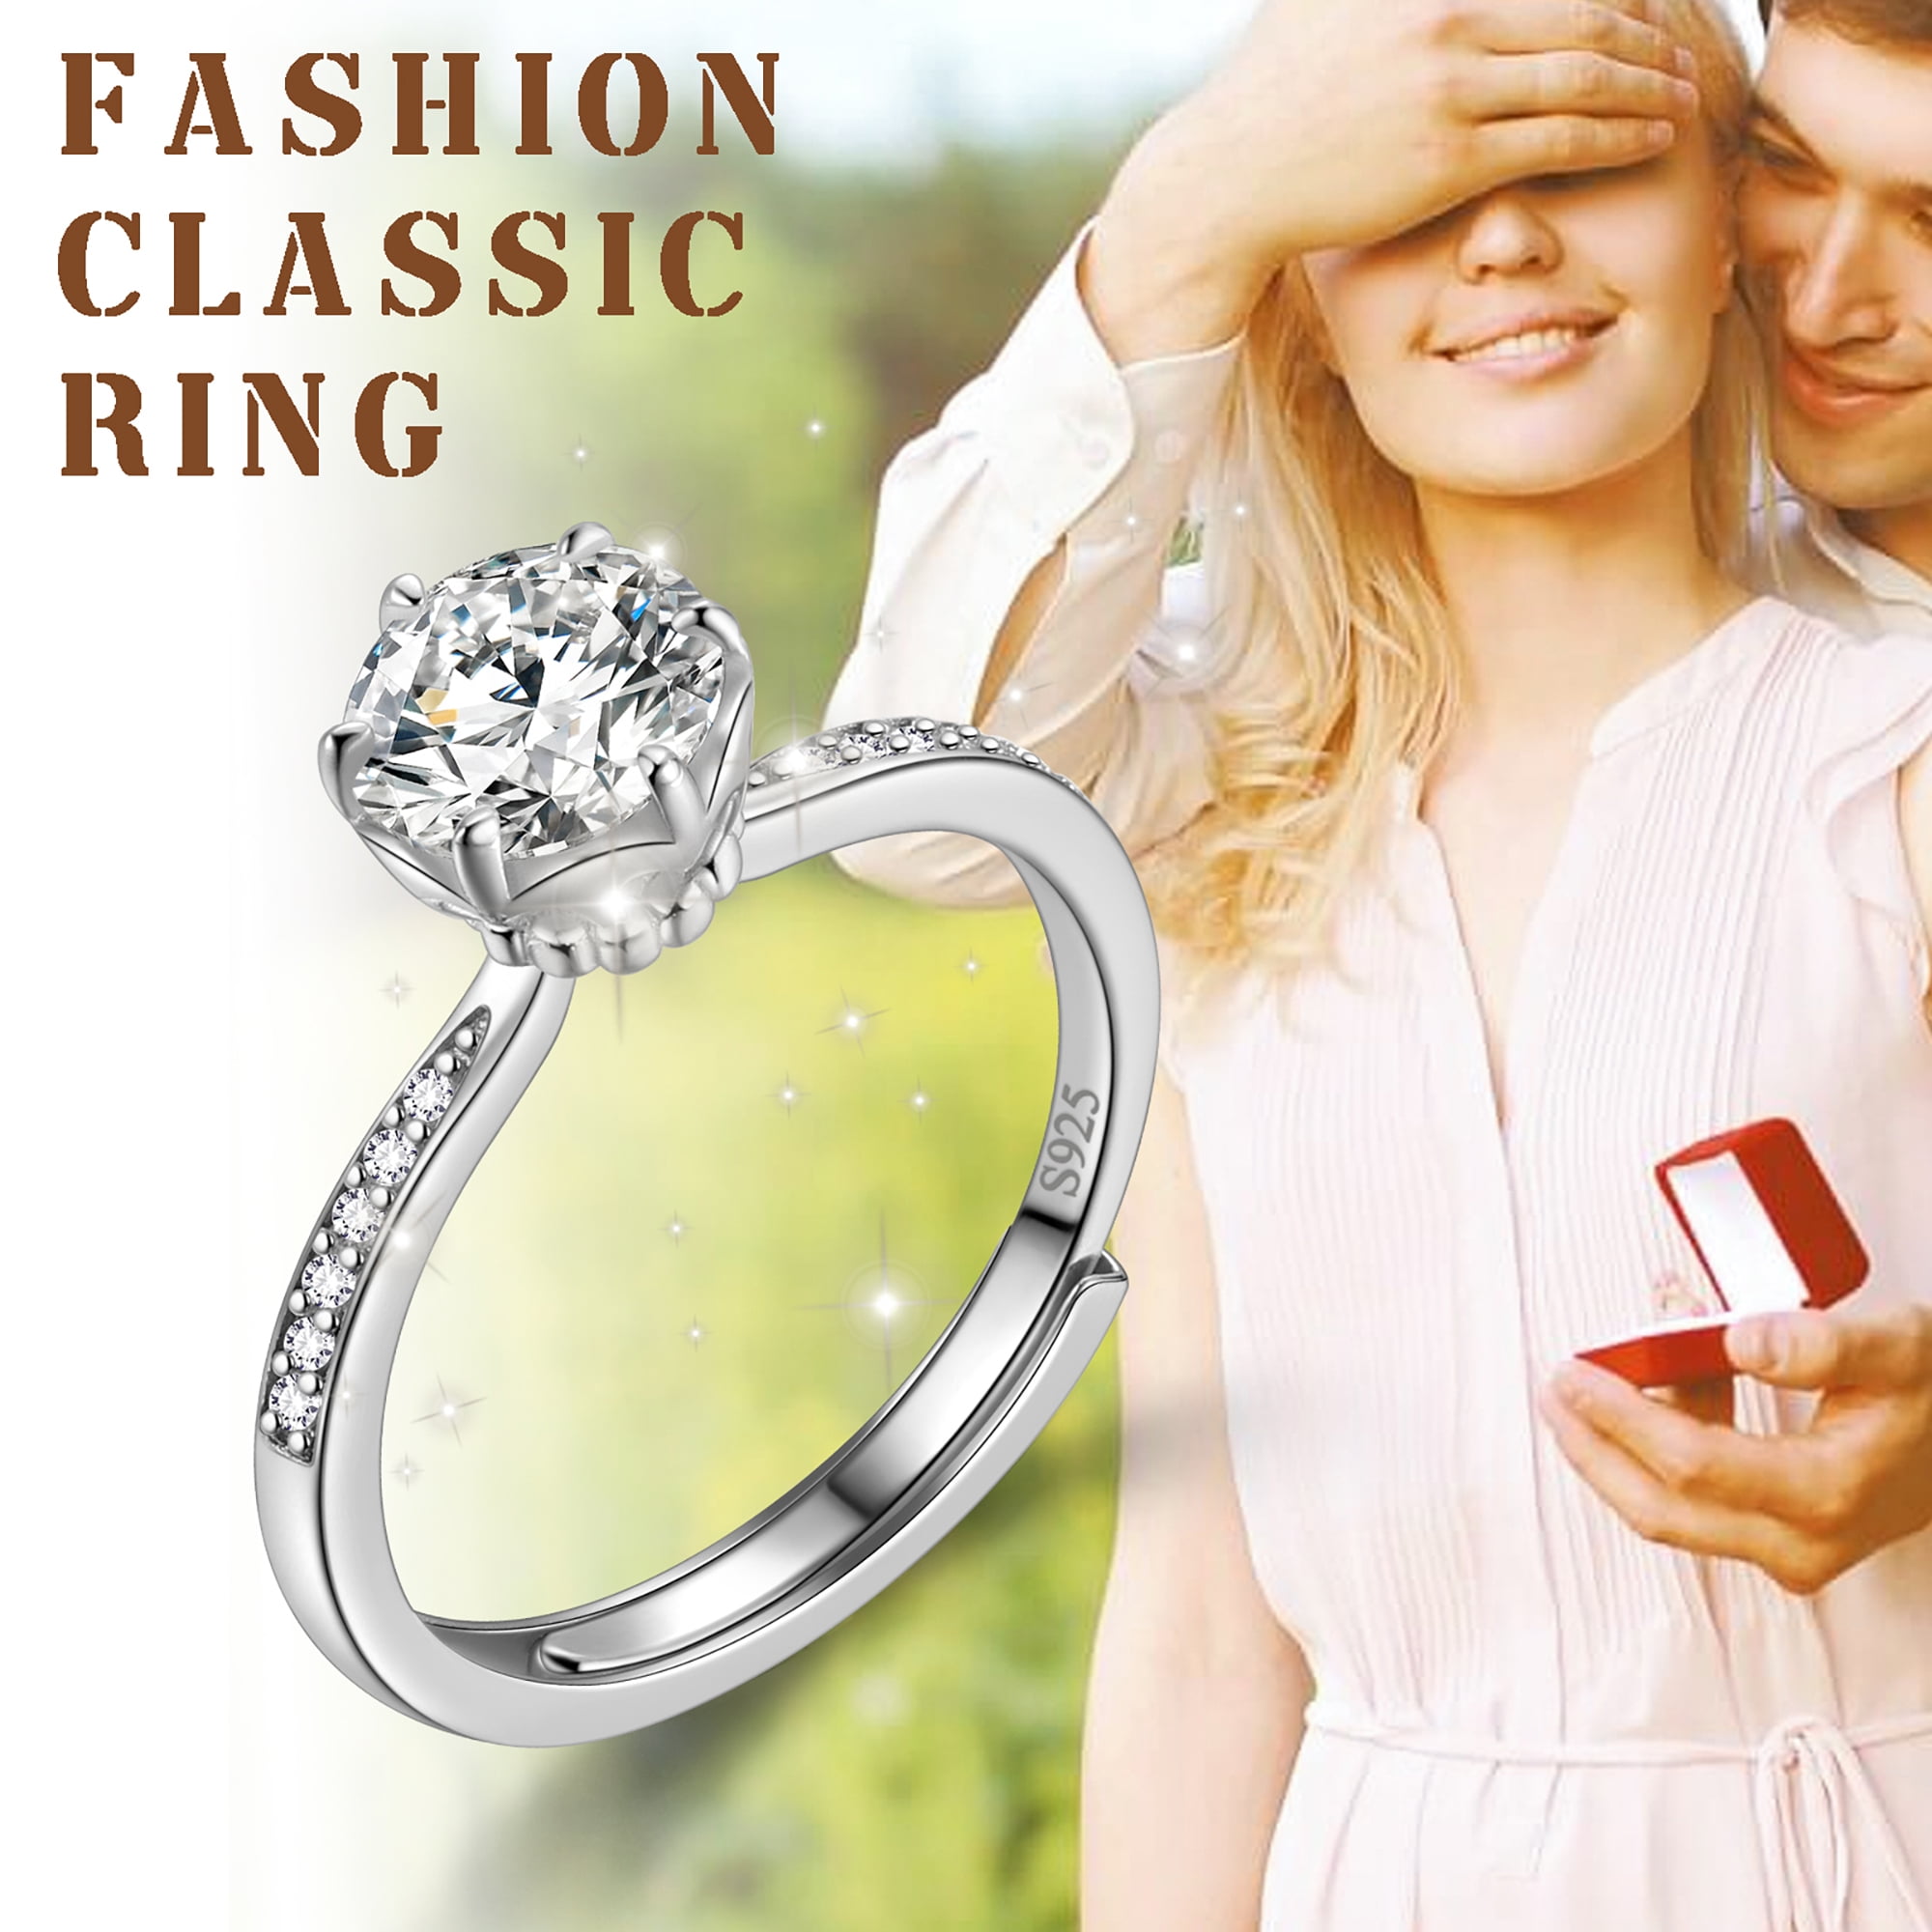 Casale Jewelers - Engagement/Wedding Ring & Jewelry Designer on Instagram:  